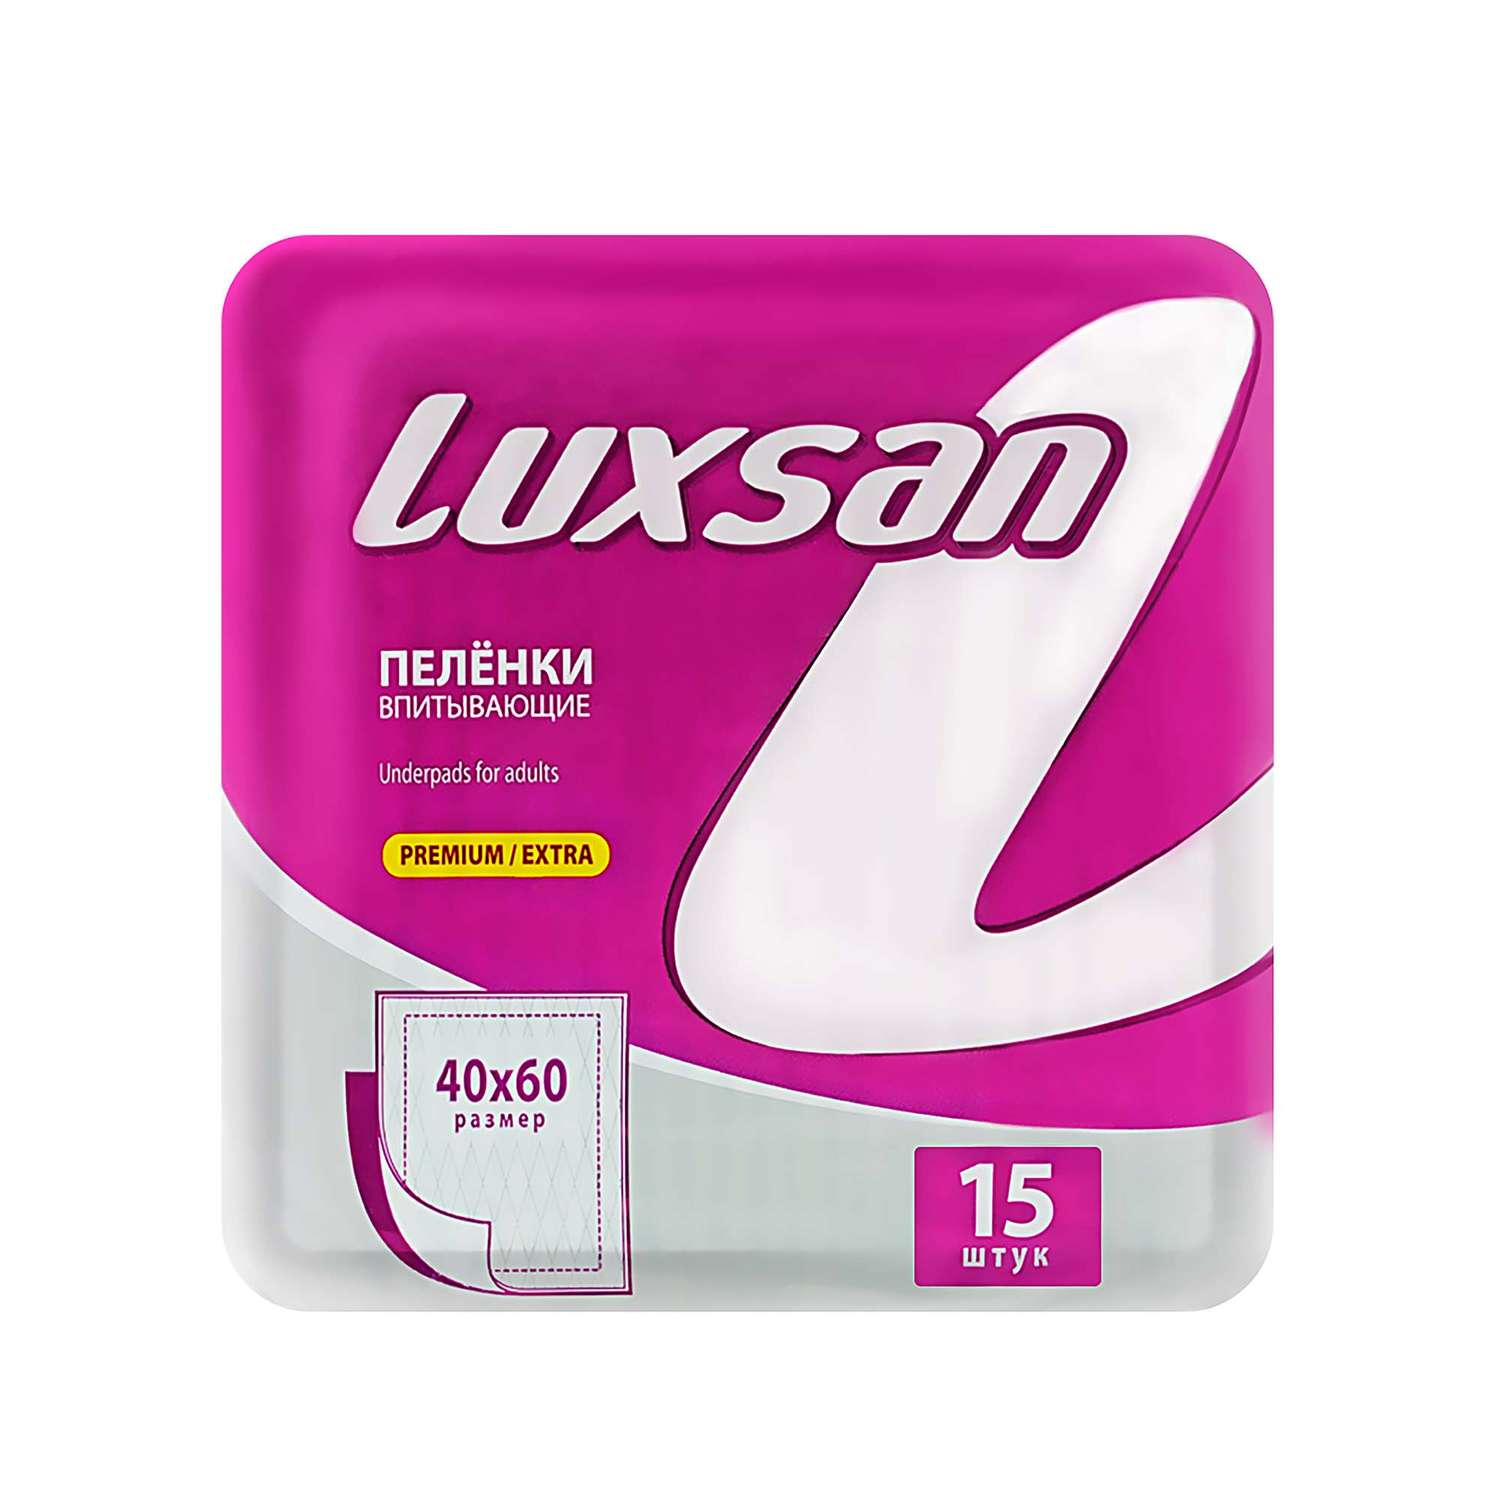 Пеленки впитывающие Luxsan Premium/Extra 40х60 15 шт - фото 1